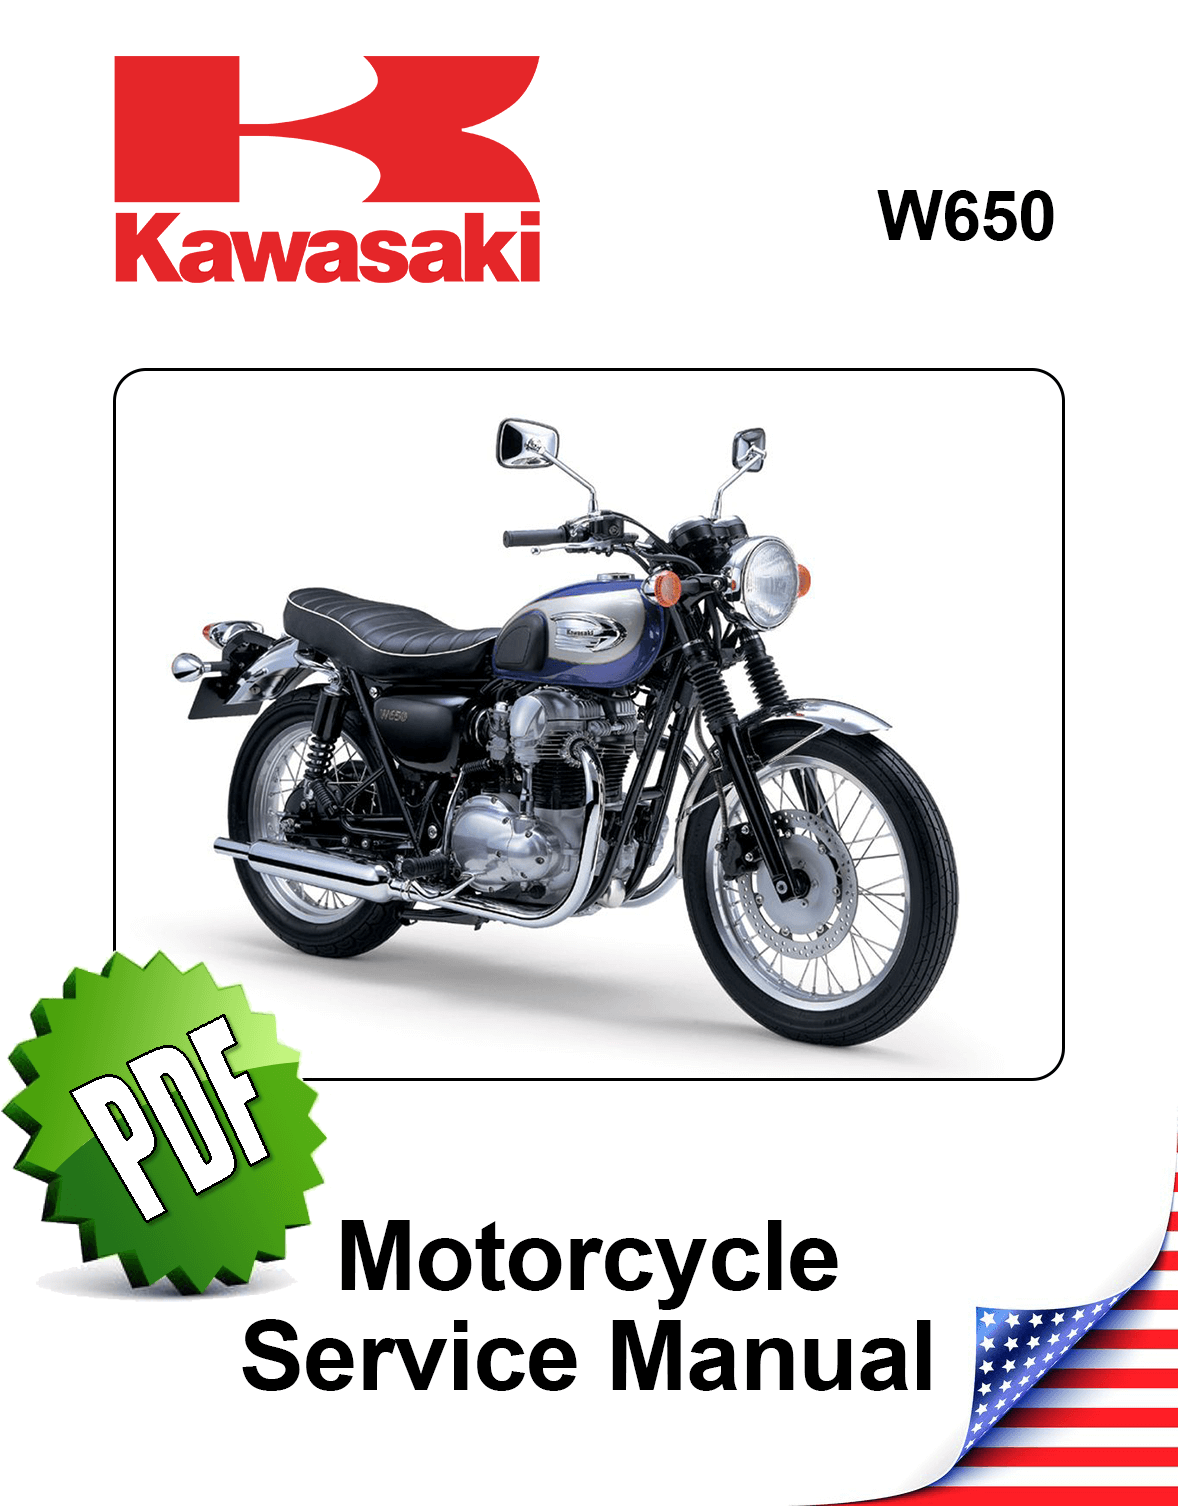 Kawasaki W650 Service Manual 1999 to 2007 PDF download